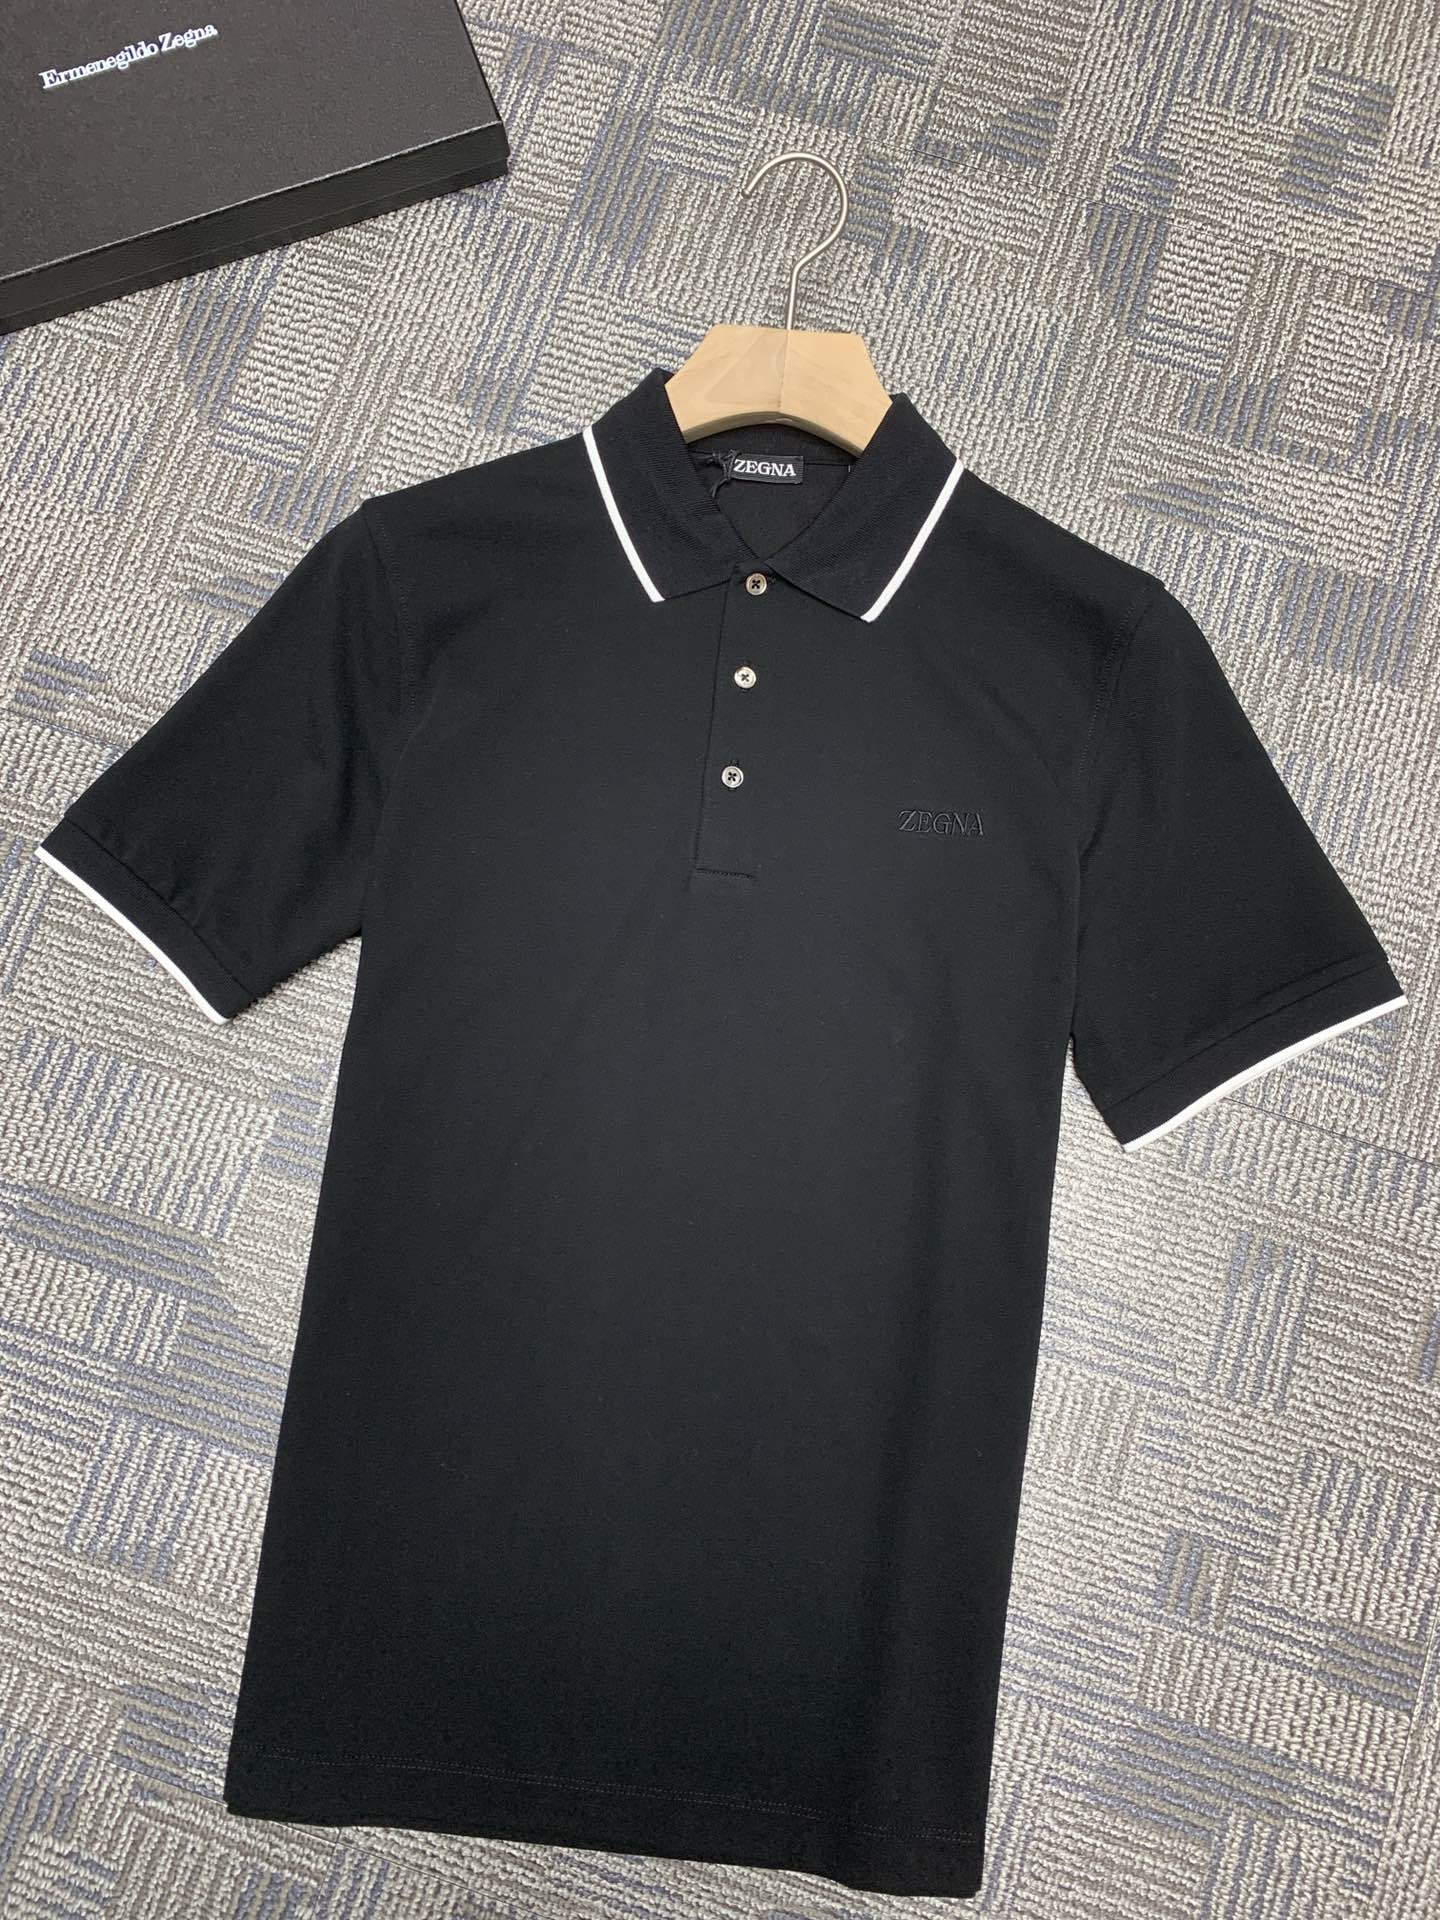 Replica
 Clothing Polo T-Shirt Black Blue Dark Grey White Cotton Knitting Stretch Short Sleeve